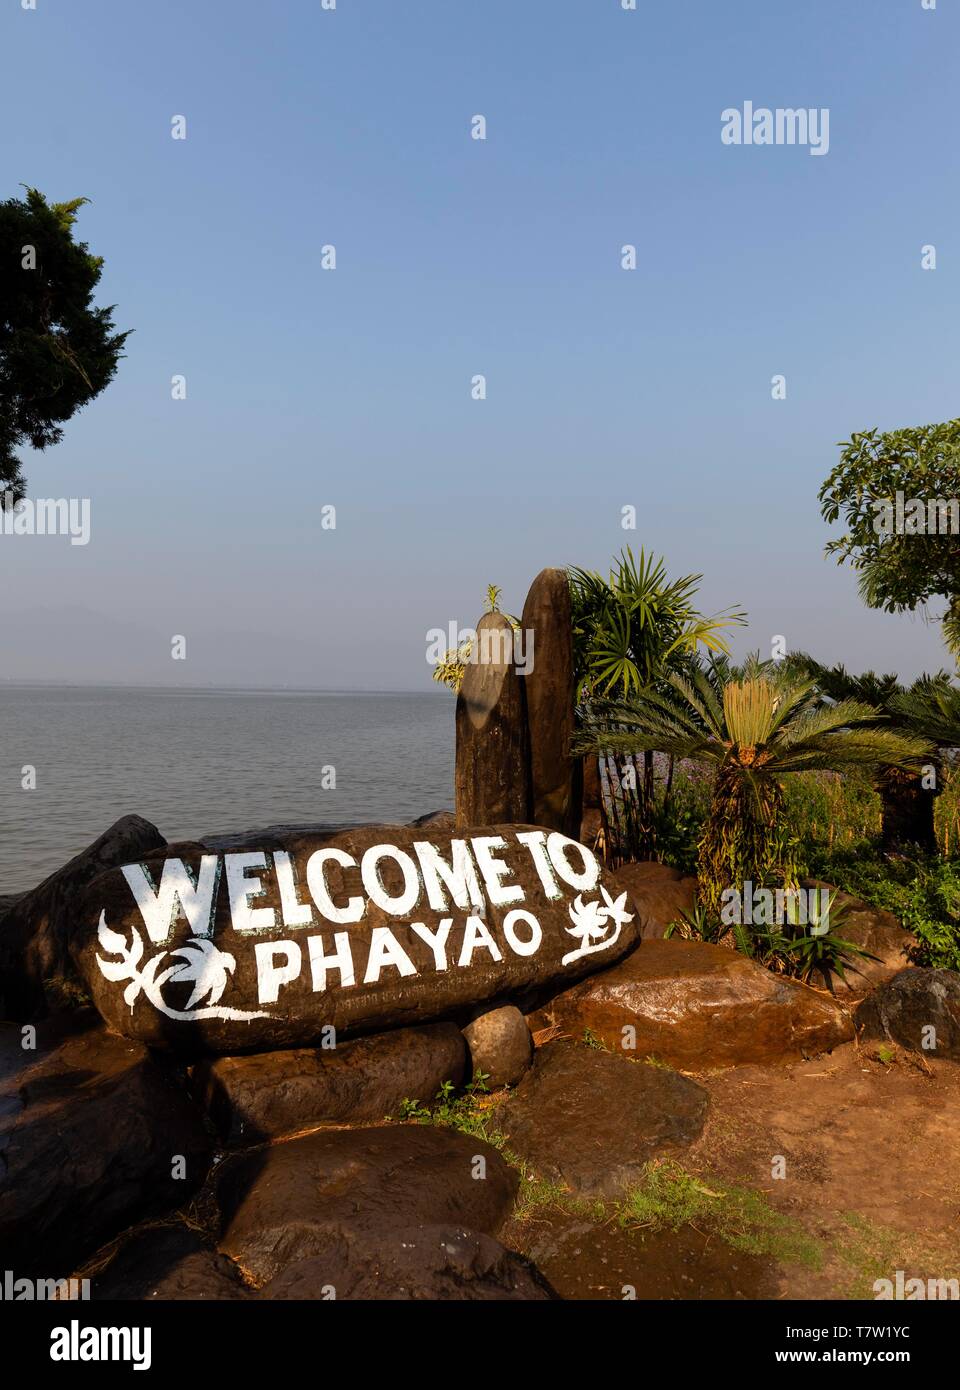 Welcome to Phayao, painted stone at Phayao Lake, Phayao, Thailand Stock Photo